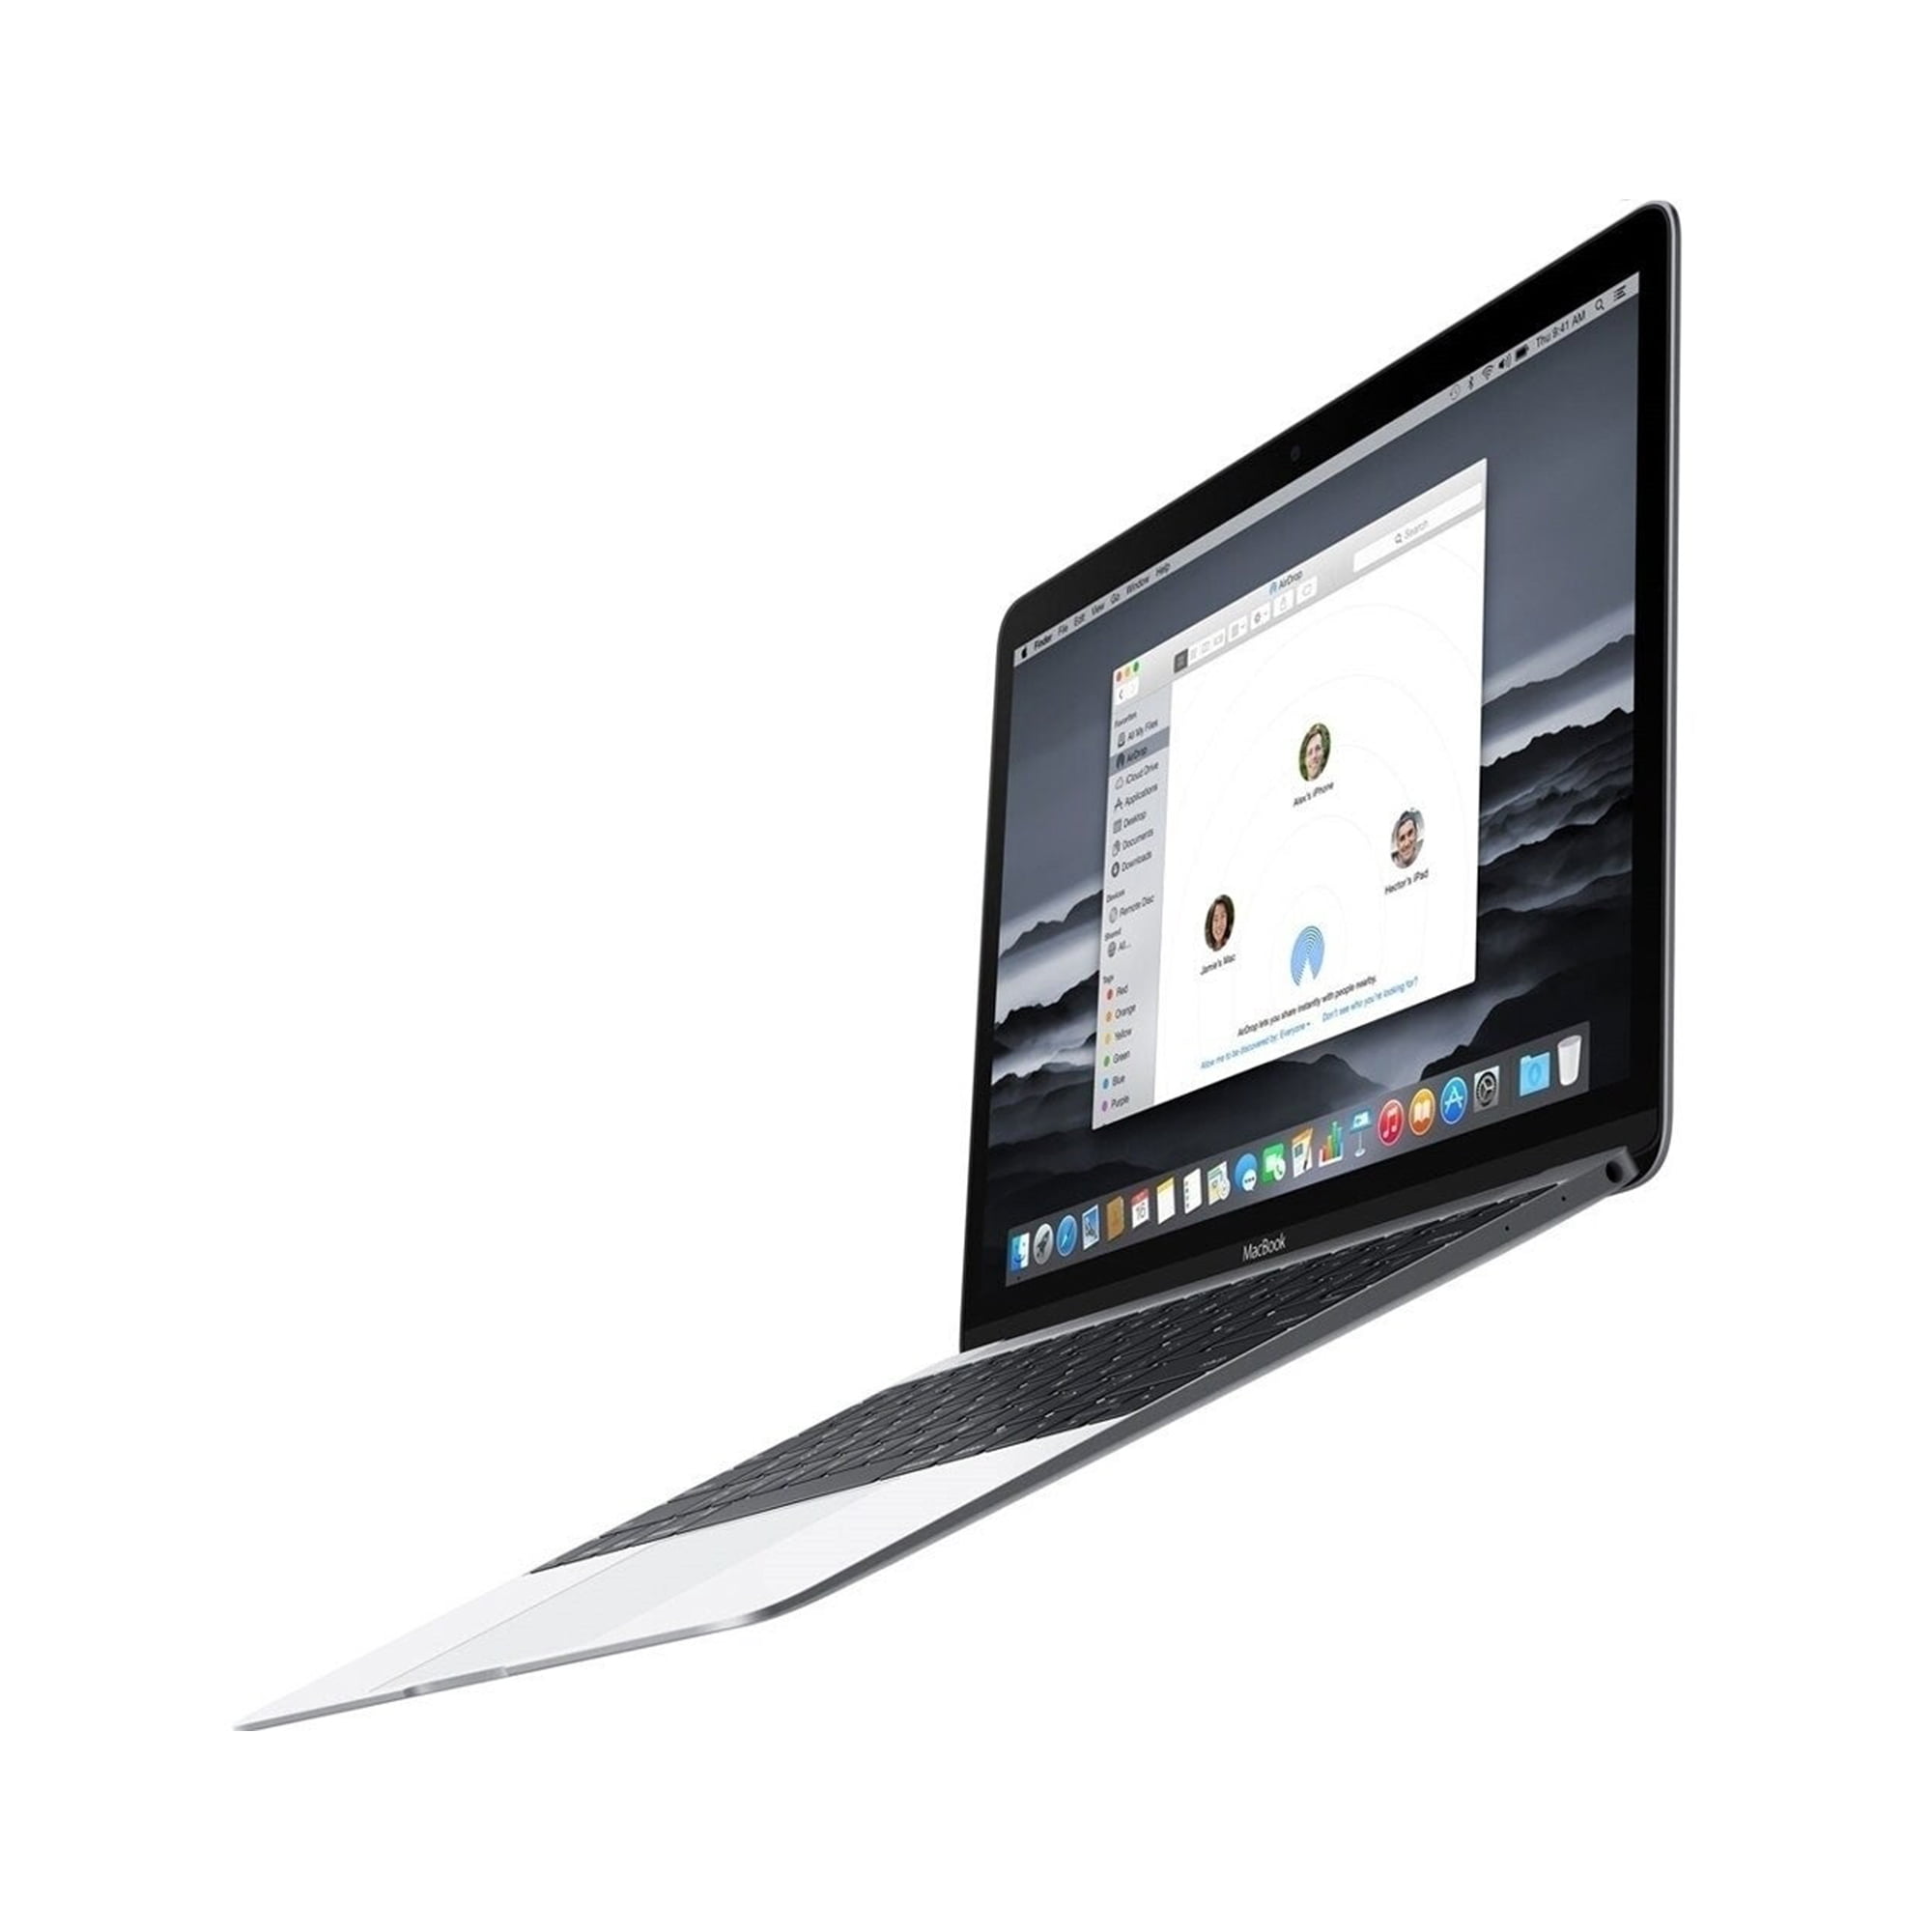 Apple A Grade Macbook 12-inch (Retina, Silver) 1.3GHz Core m7